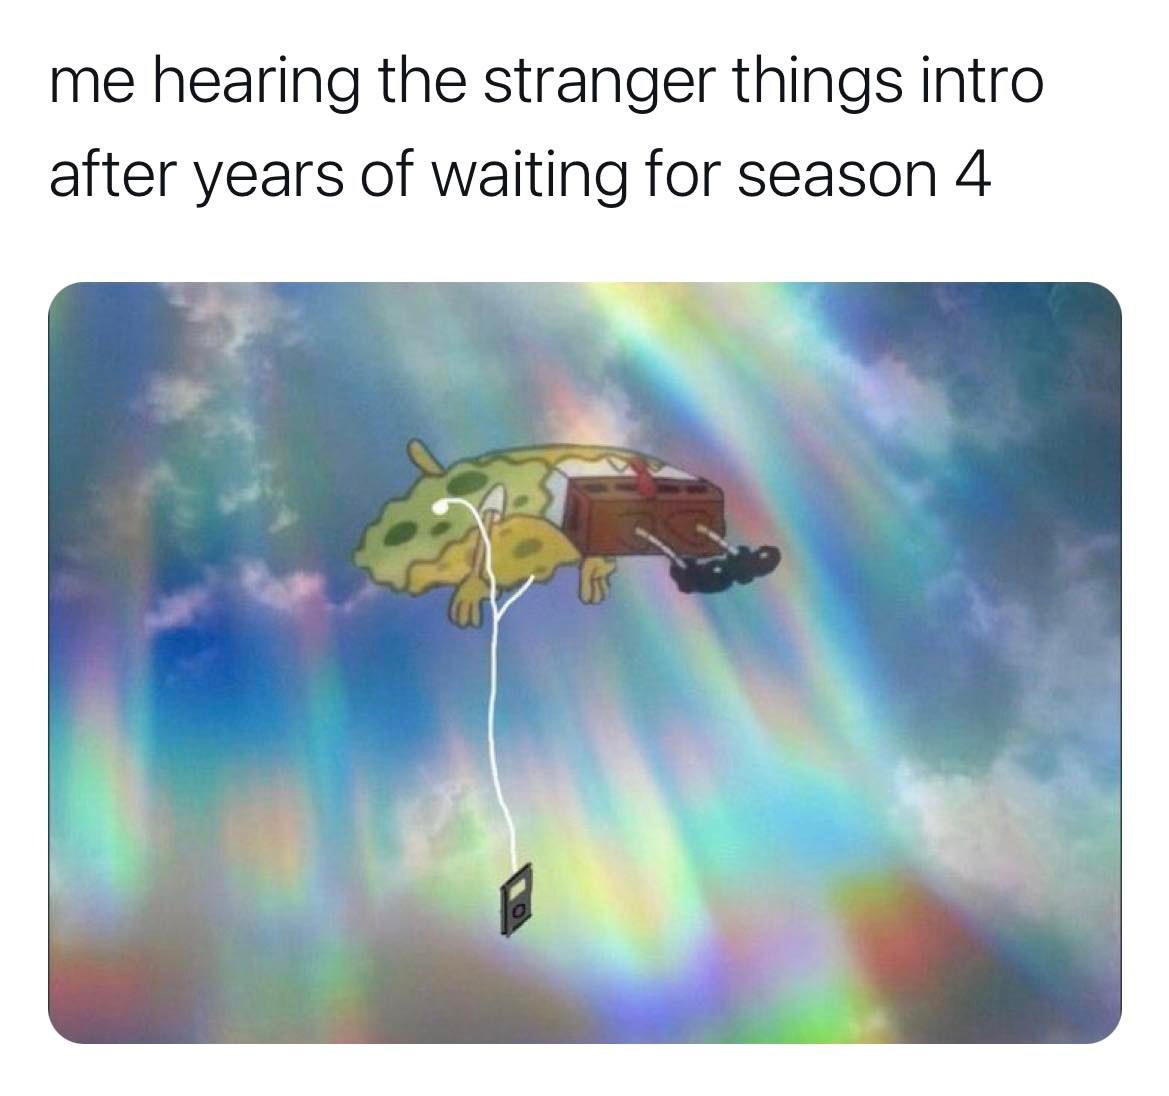 Stranger Things Season 4 Memes